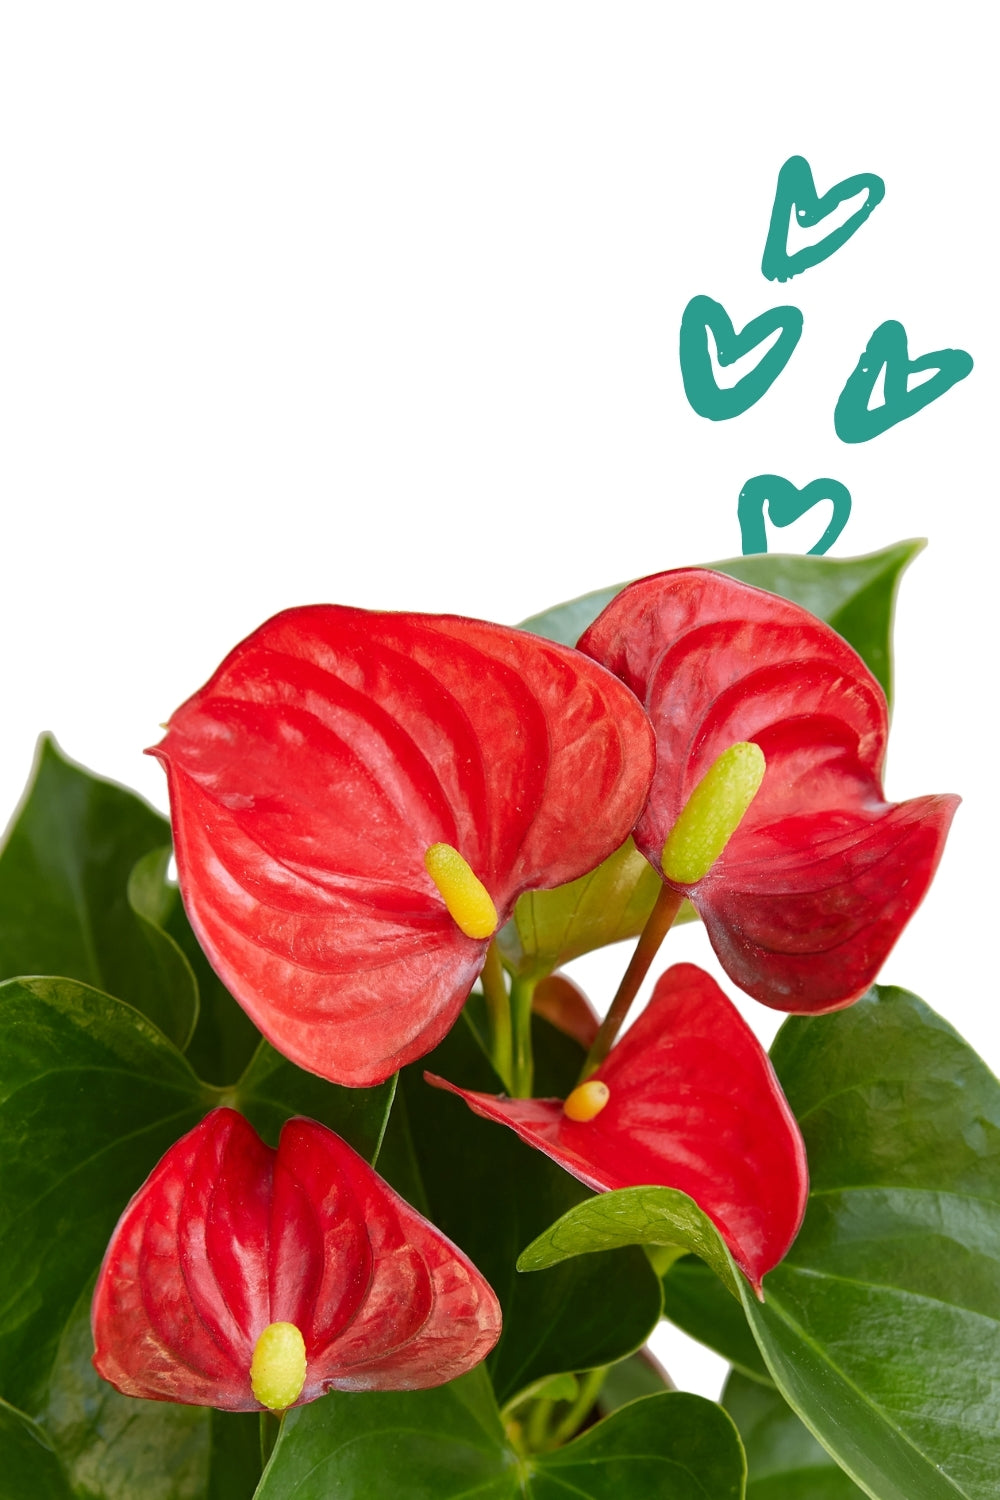 Flamingo Flower, Red/Pink/White Anthurium, valentines day flowers, valentines delivery flowers